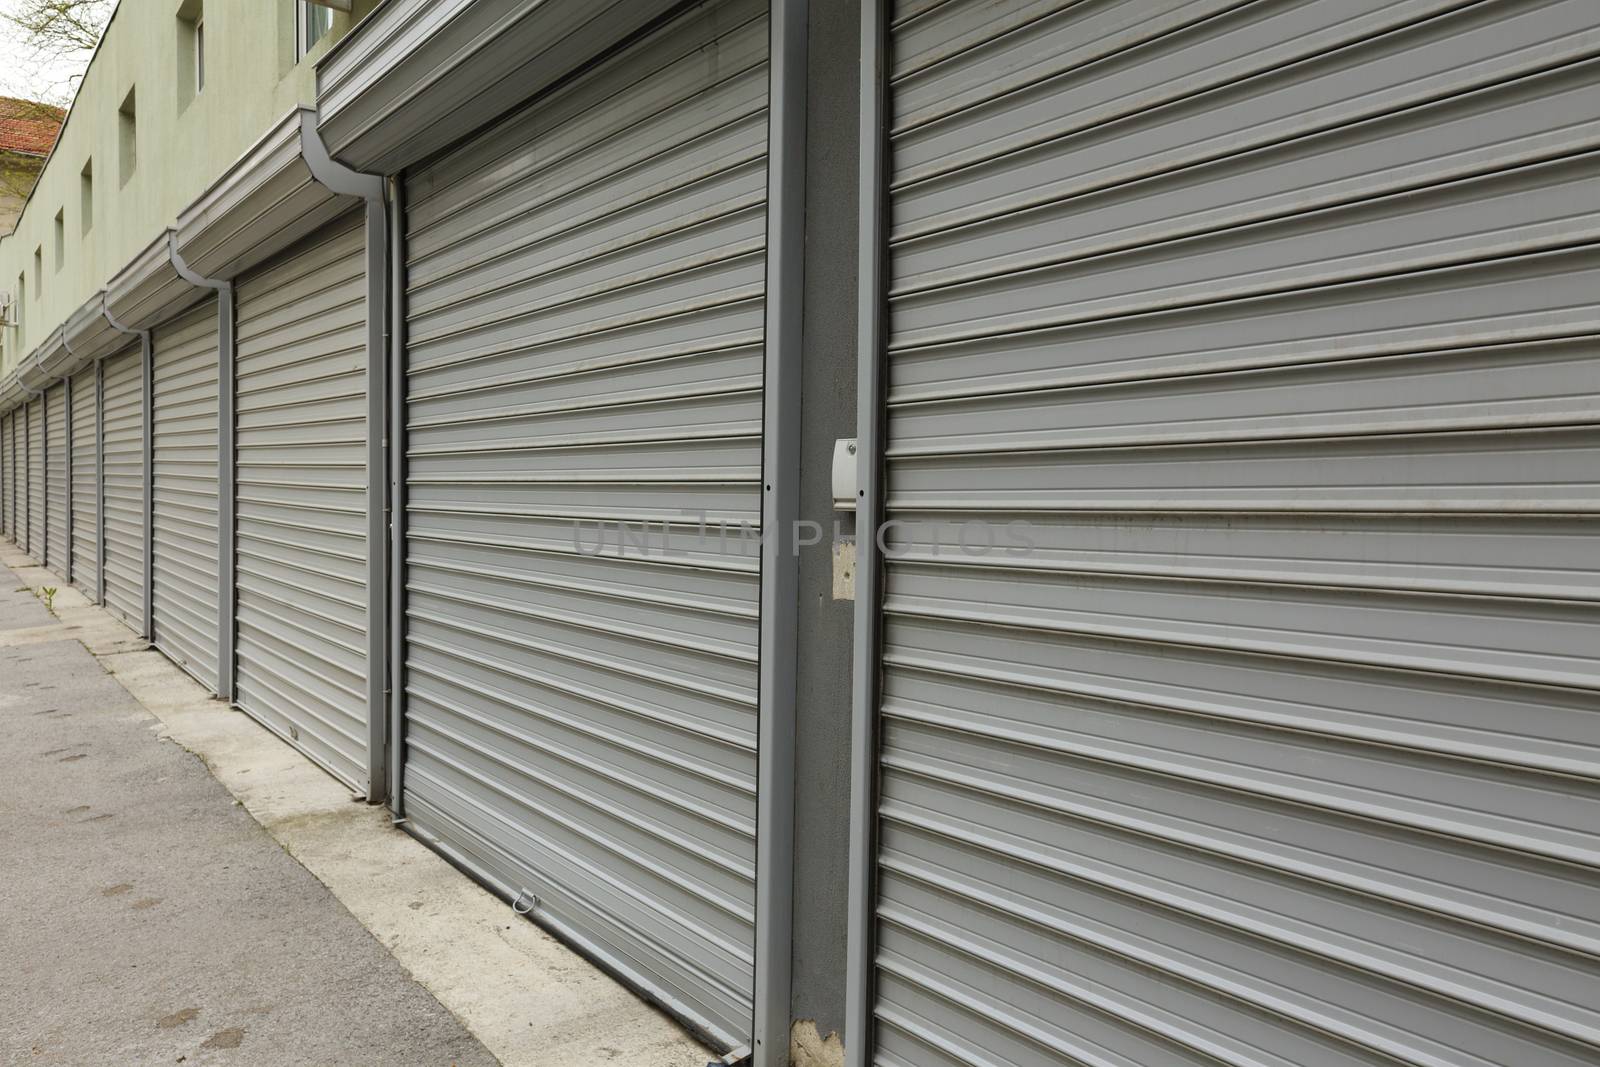  corrugated metal doors of garages